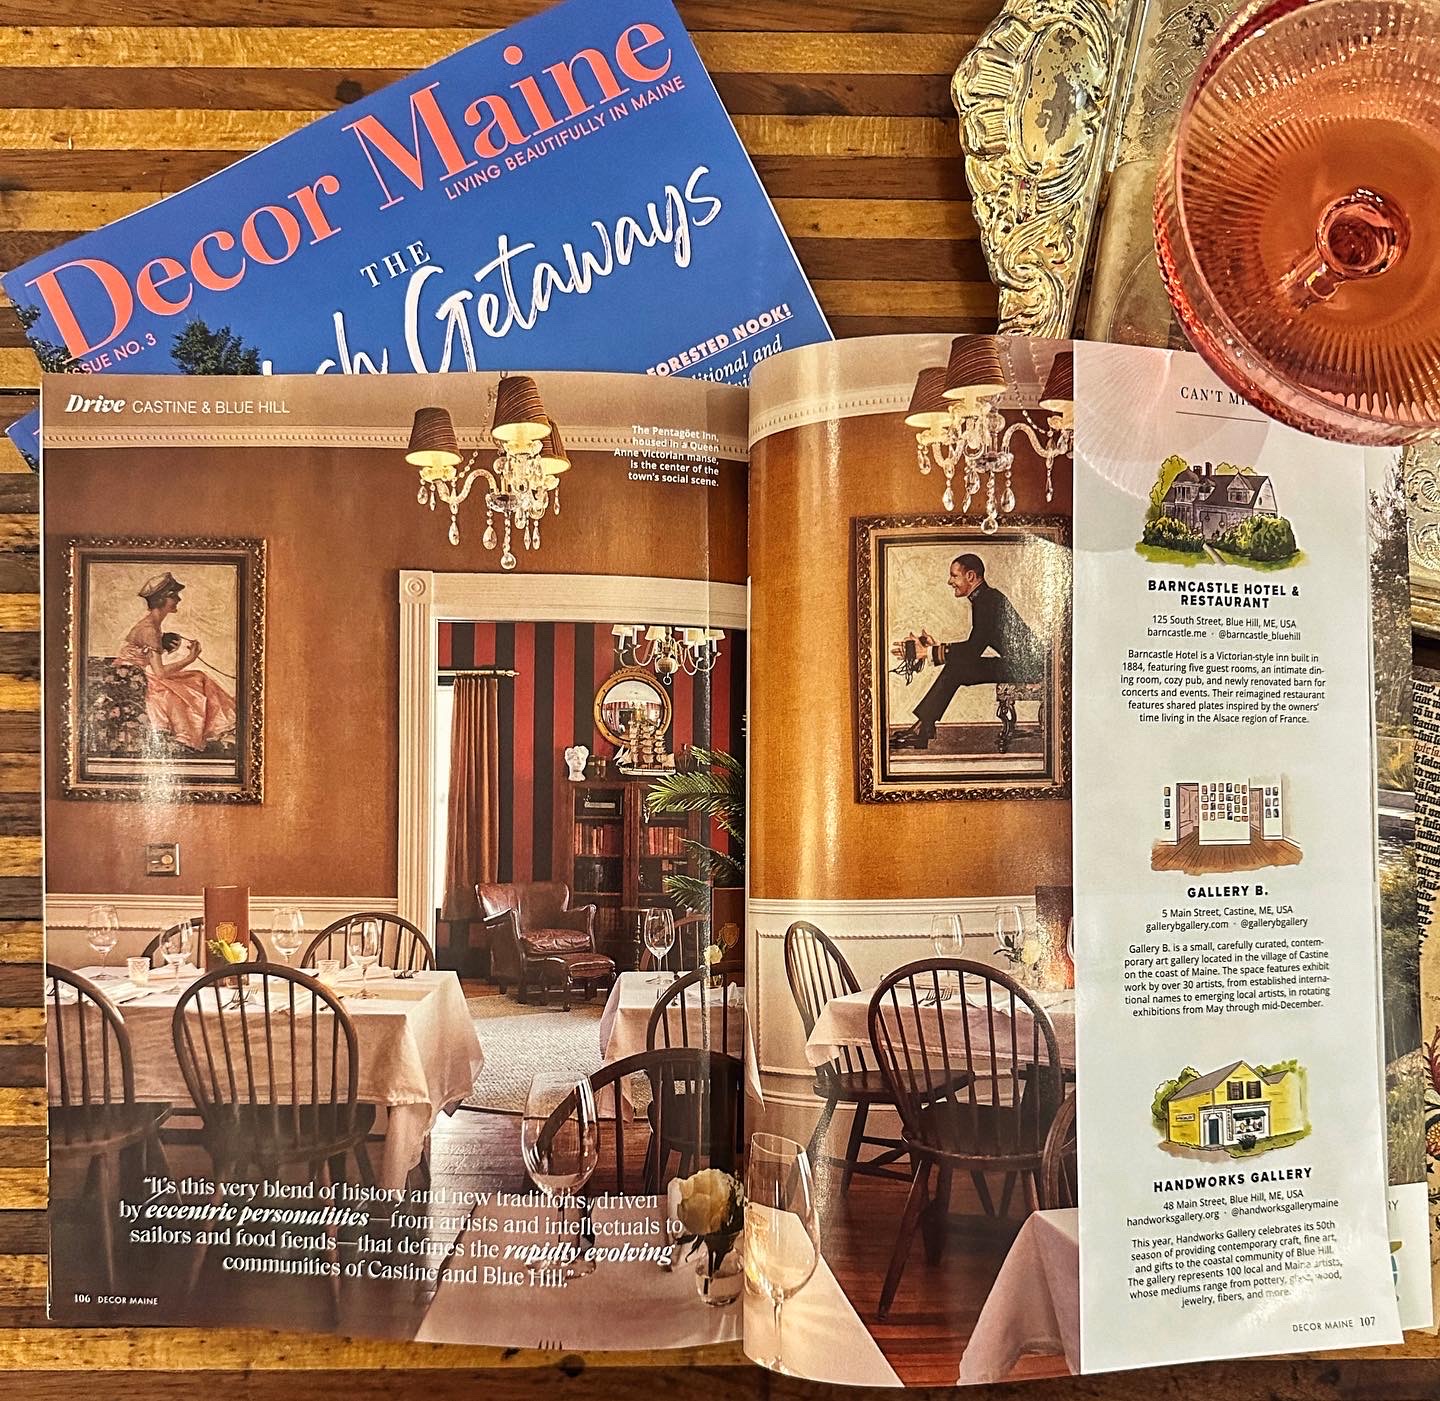 Pentagoet Inn in Decor Maine magazine